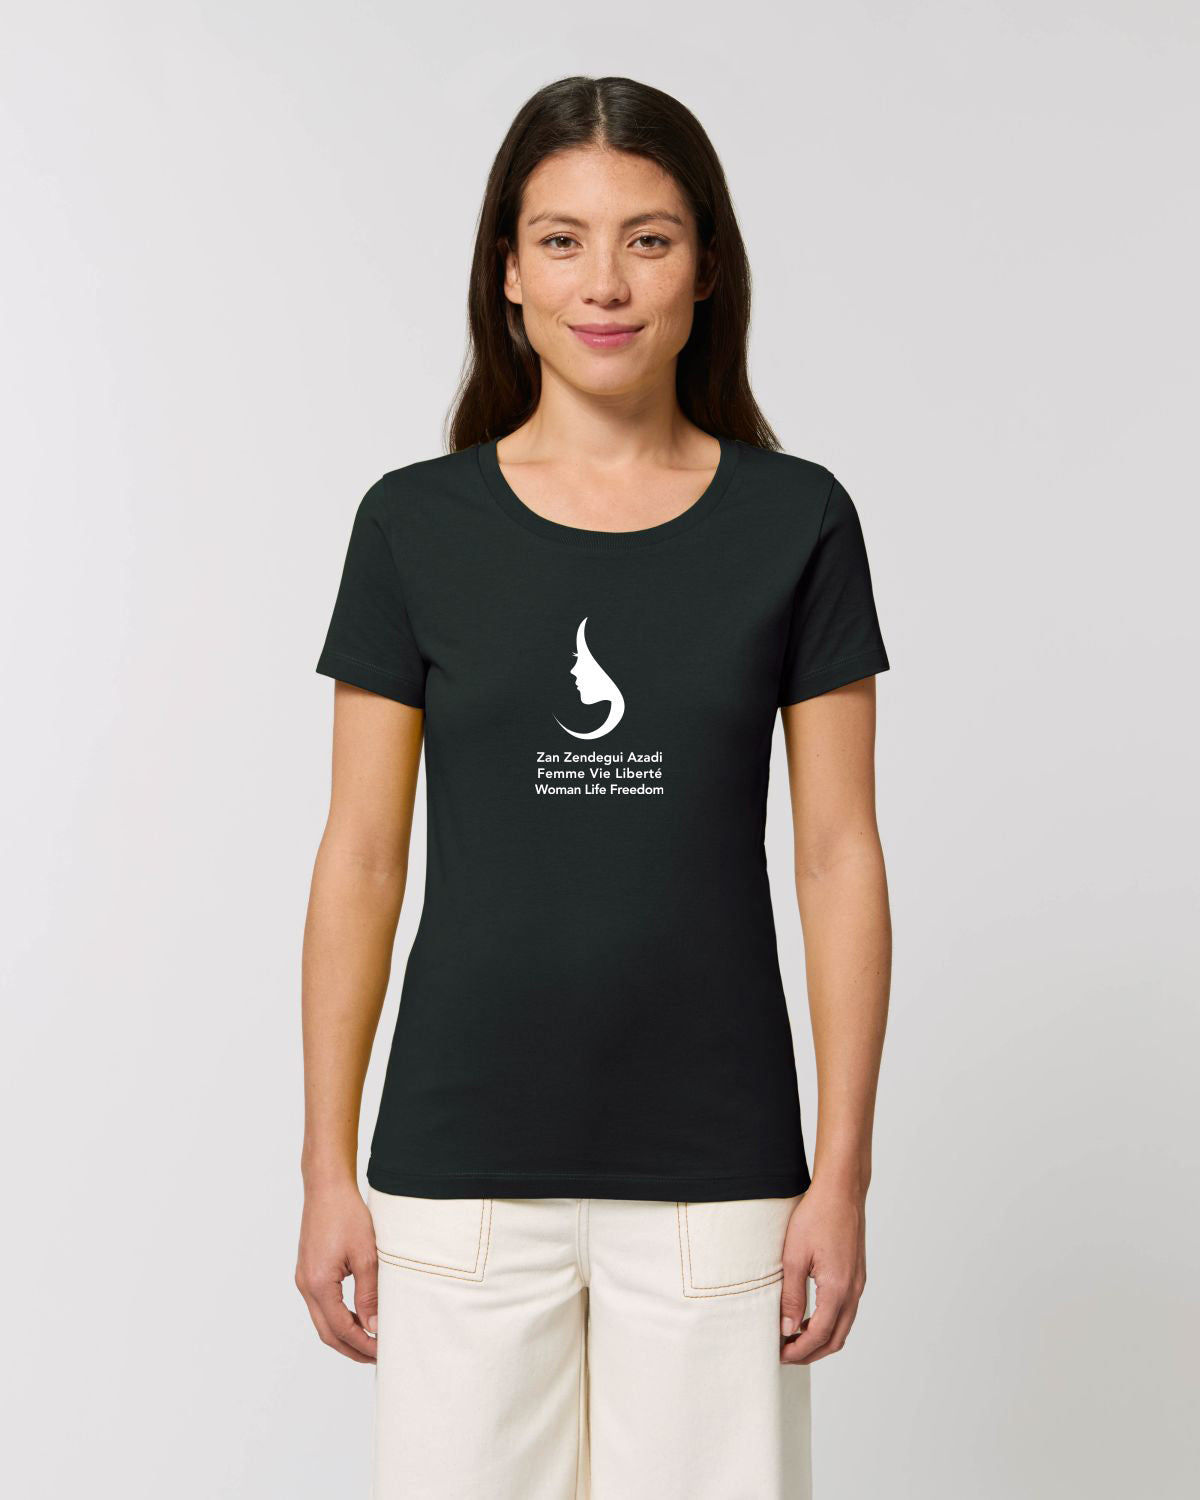 T -shirt "Woman Life Liberty" - Woman